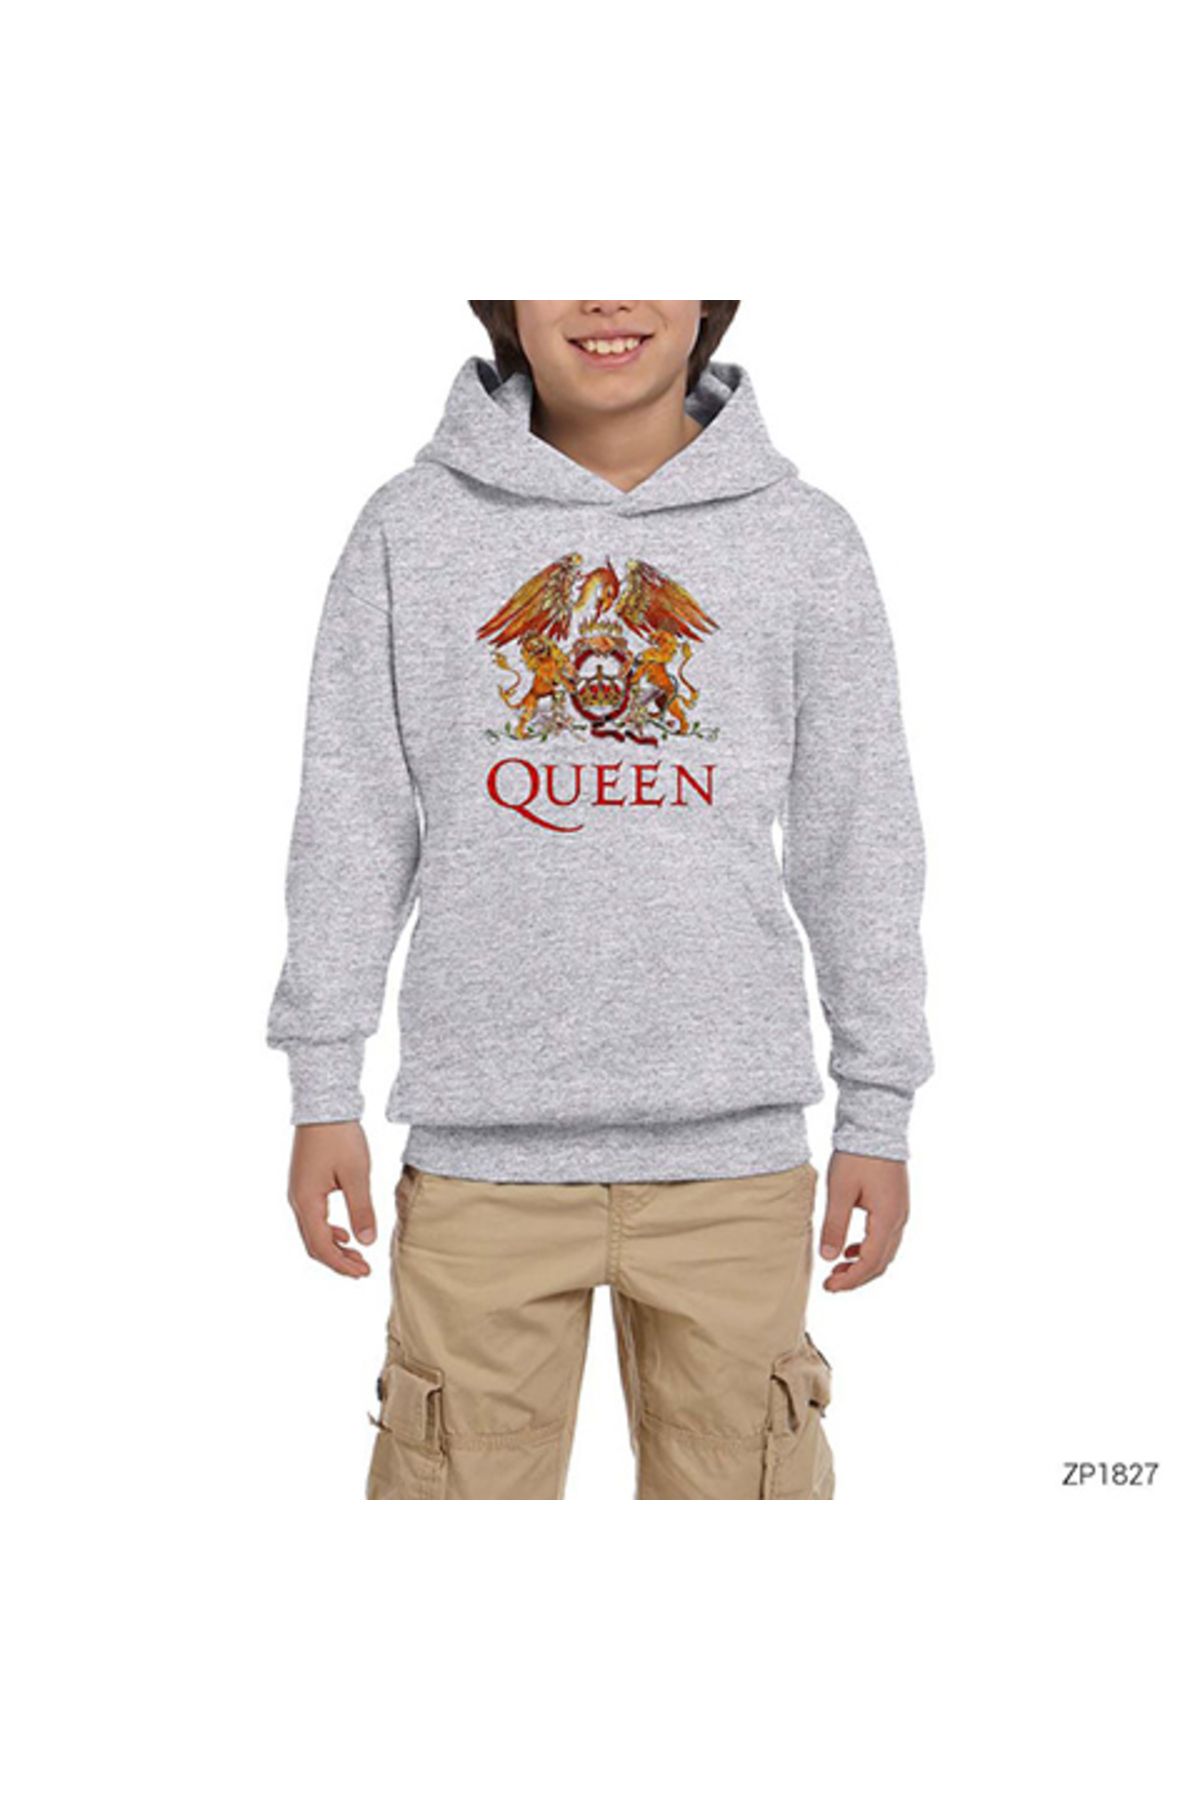 Anonim Moda Ultimate Best Of Queen Gri Çocuk Kapşonlu Sweatshirt